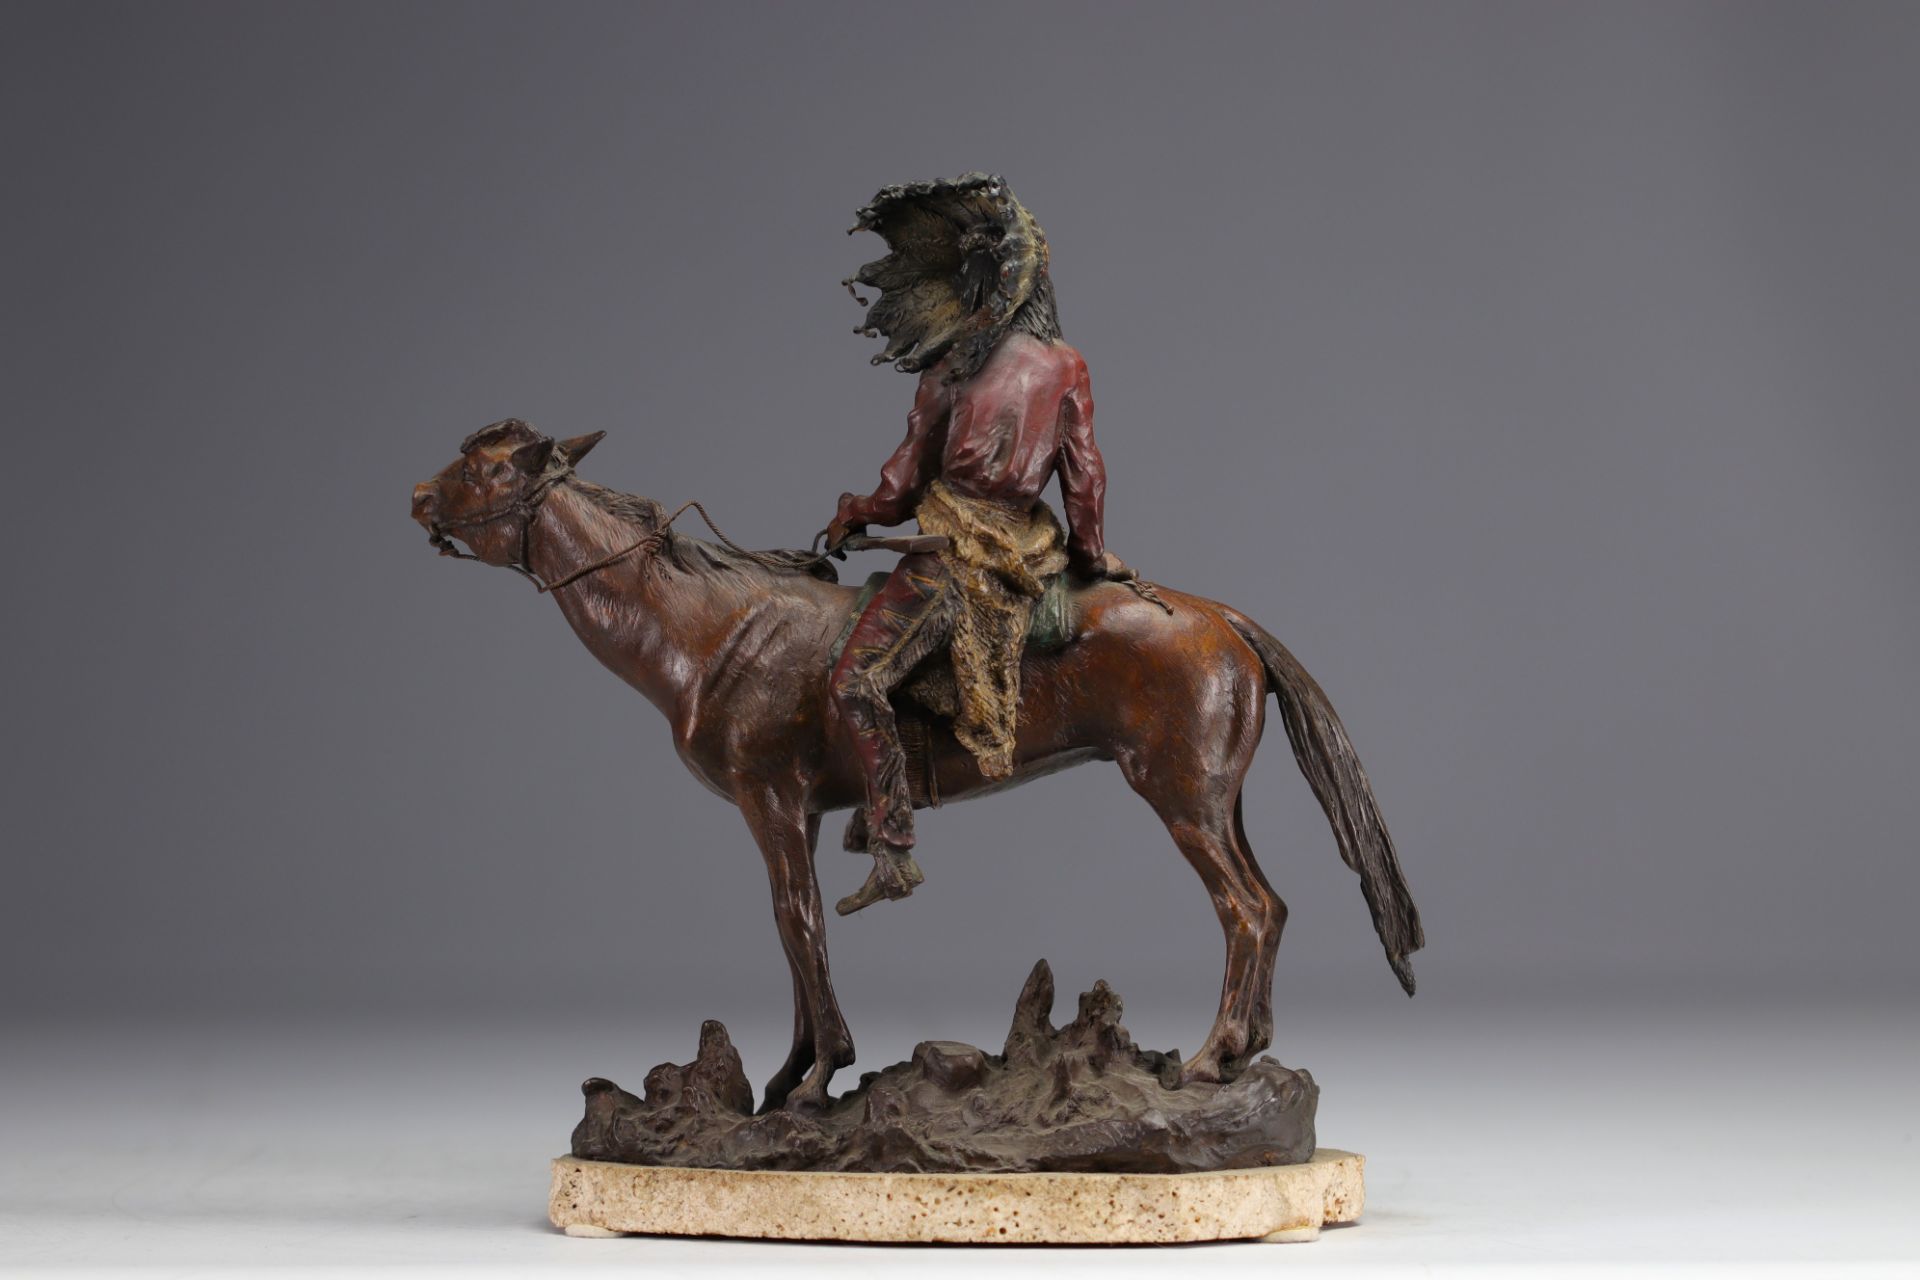 Carl KAUBA (1865-1922) "Indian chief on horseback" Vienna polychrome bronze. - Image 3 of 3